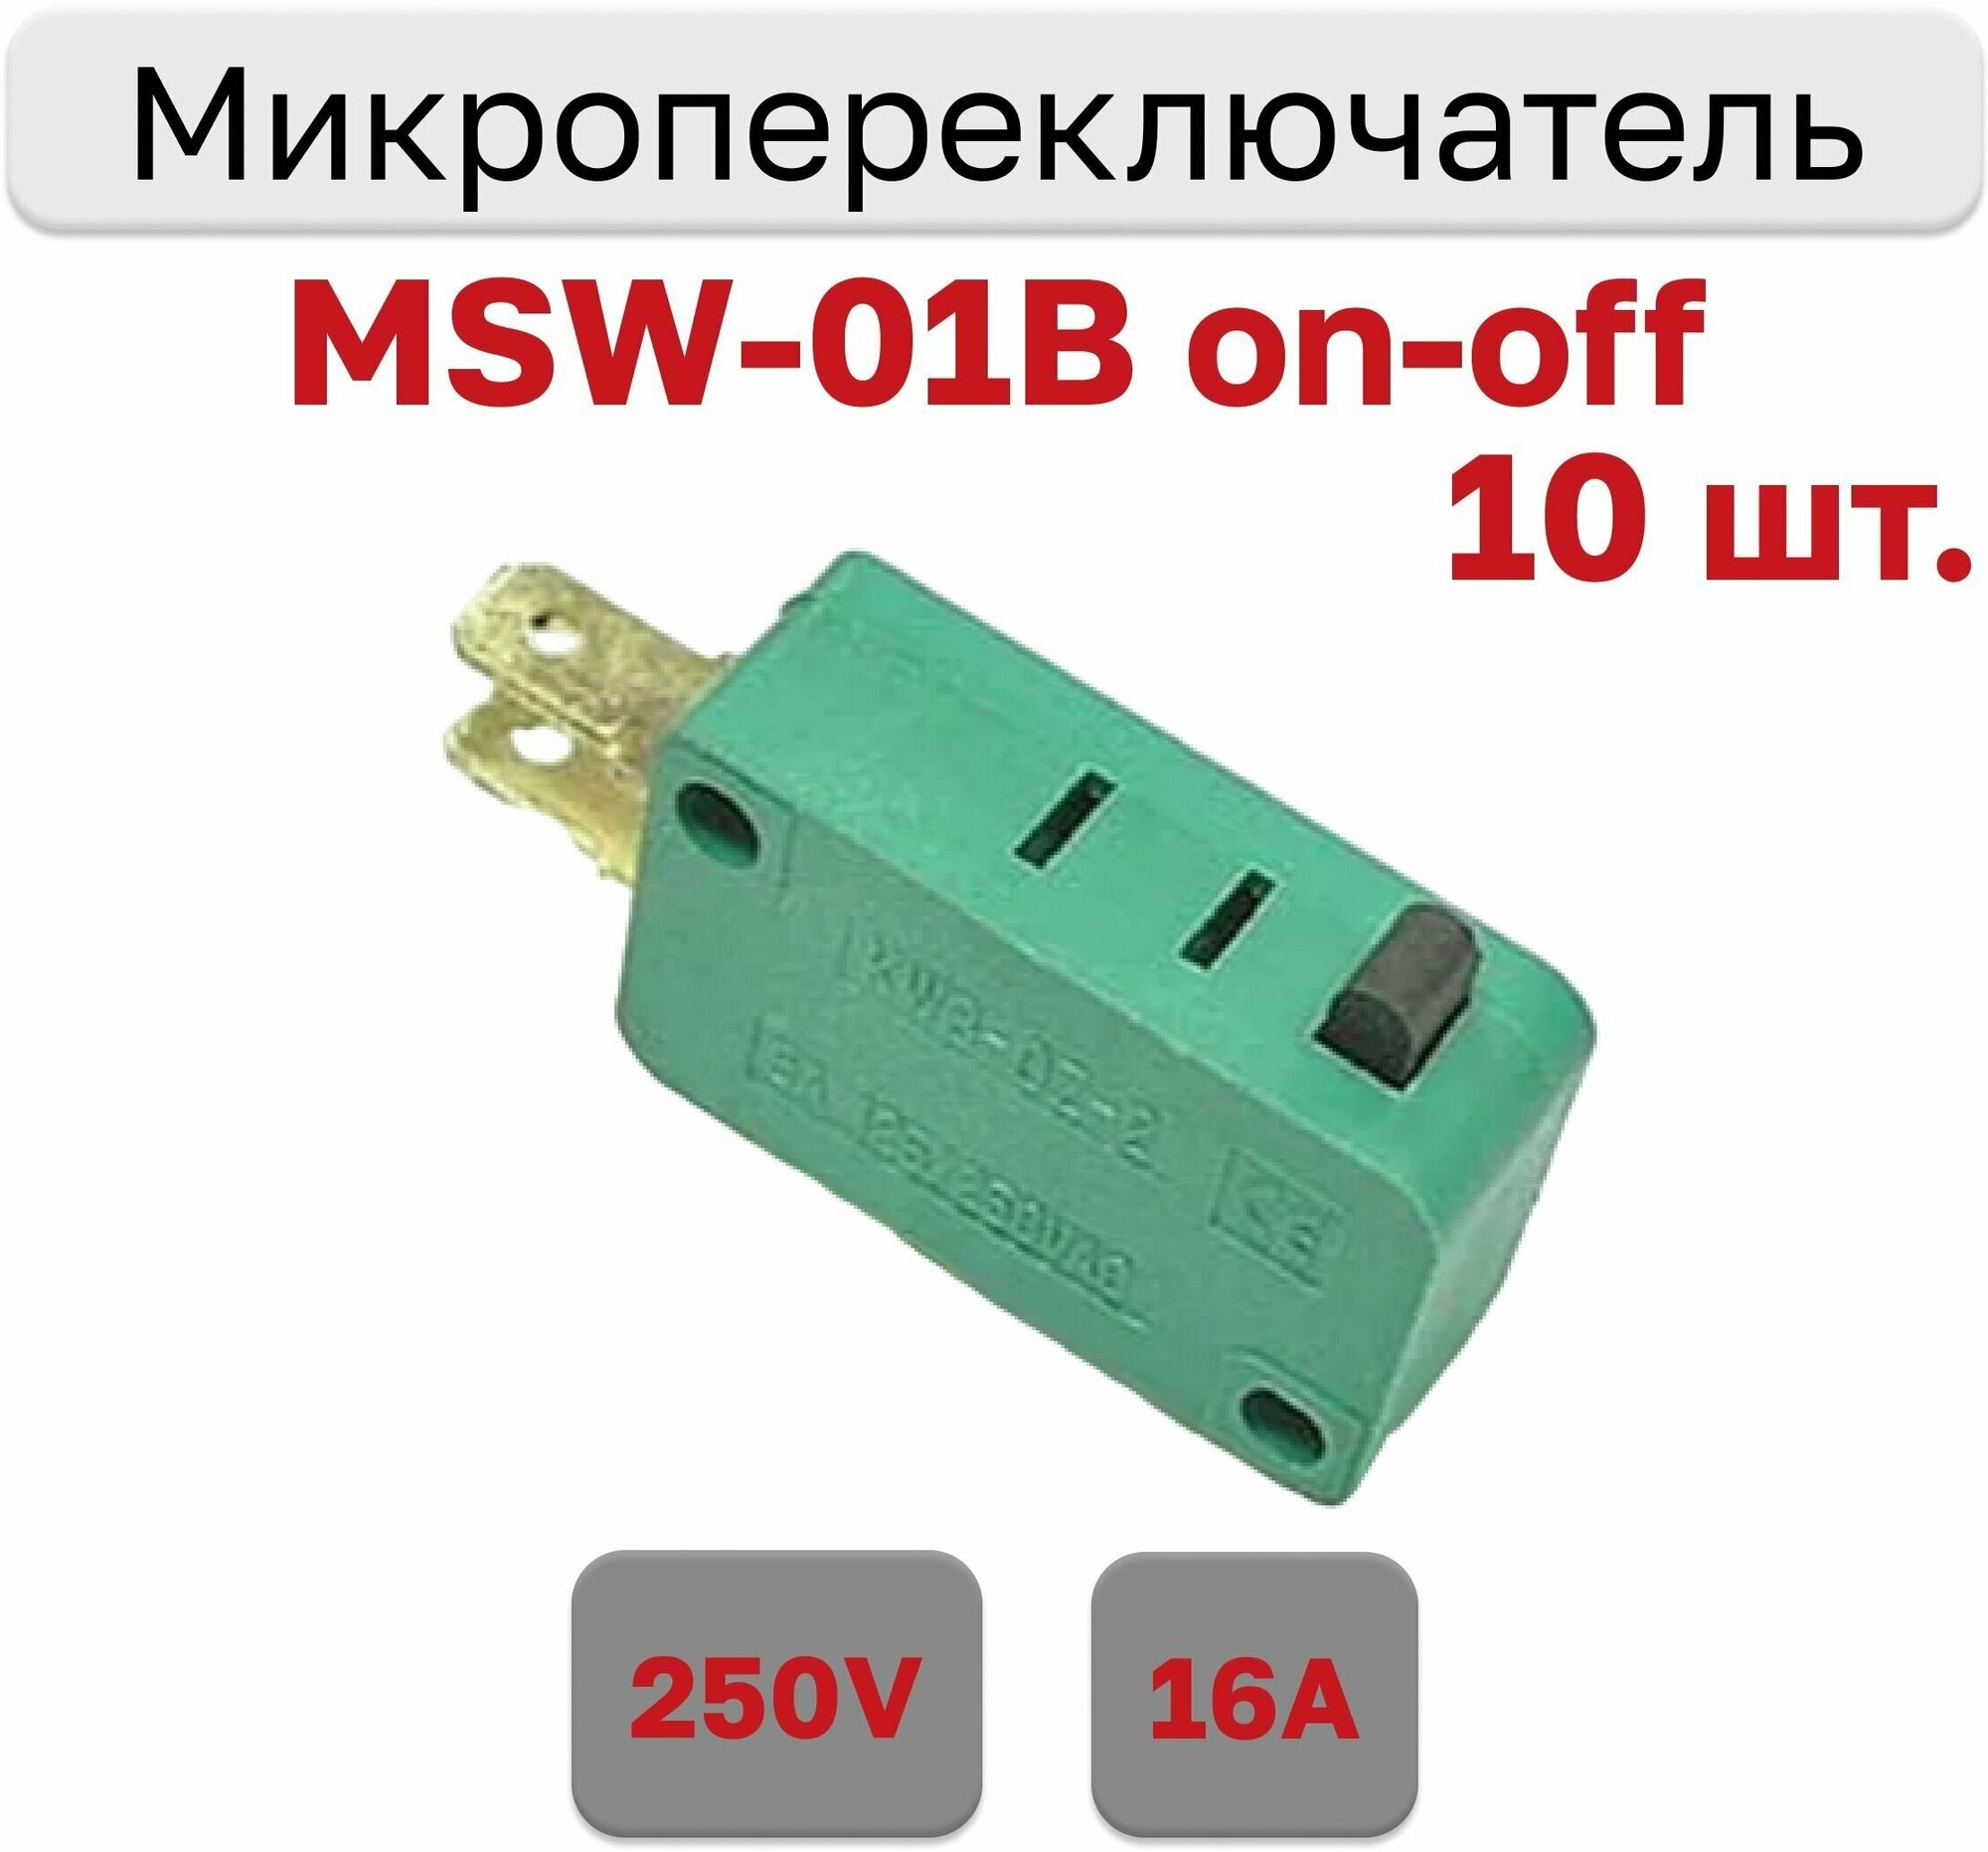 Микропереключатель MSW-01B on-off (16A/250VAC) 10 шт.